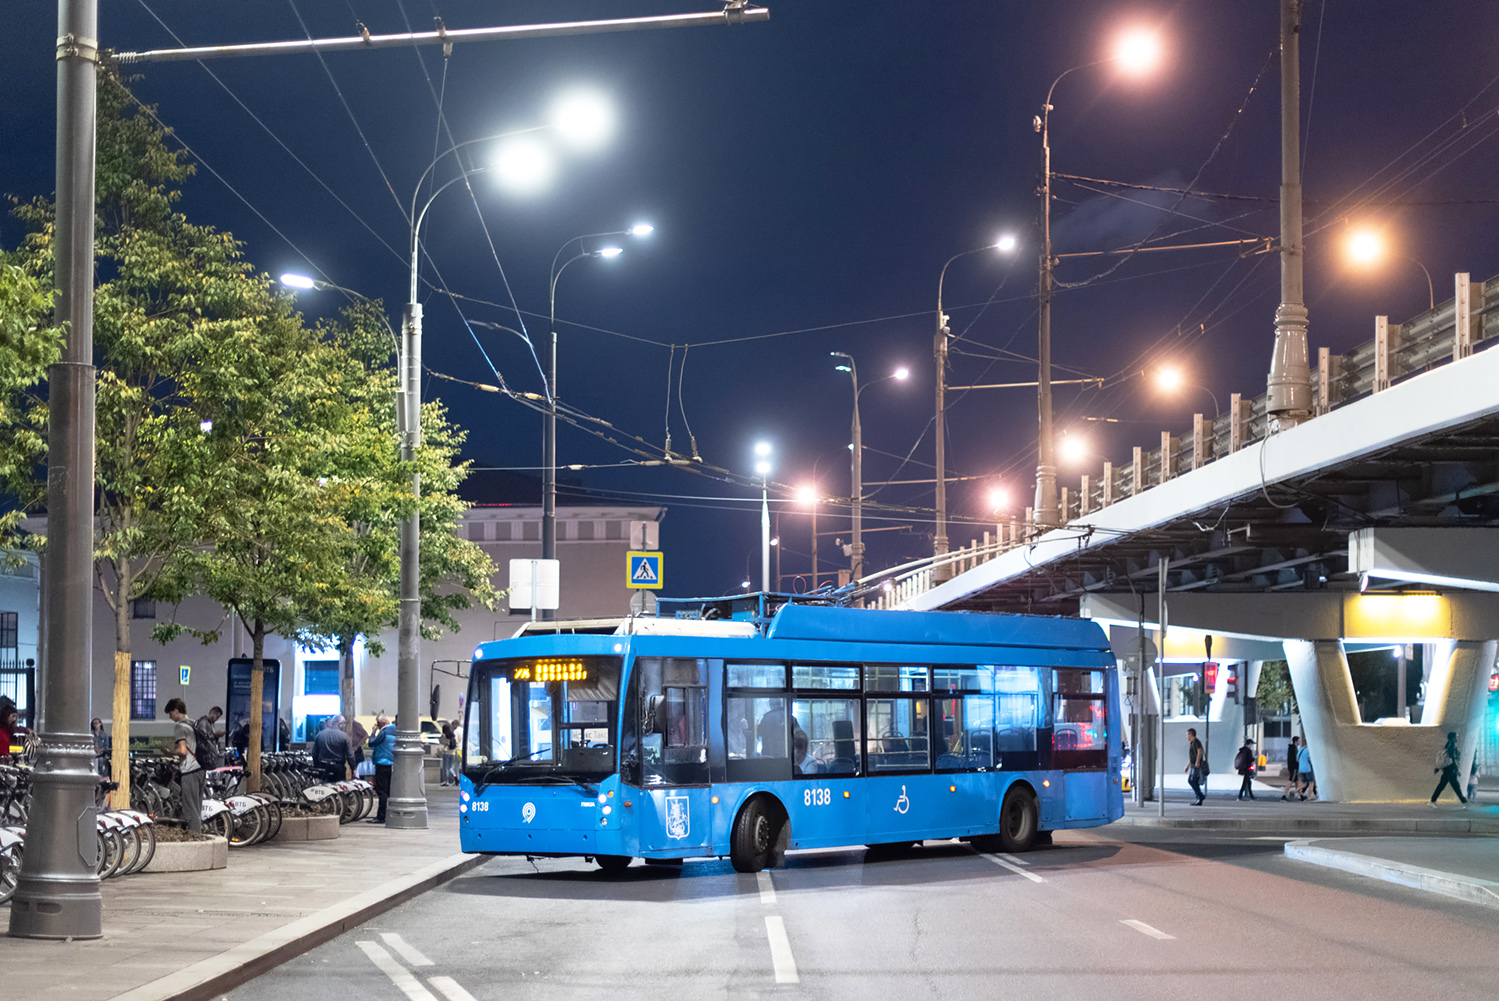 Moskwa, Trolza-5265.00 “Megapolis” Nr 8138; Moskwa — Last Days of the Moscow Trolleybus on August 24 — 25, 2020